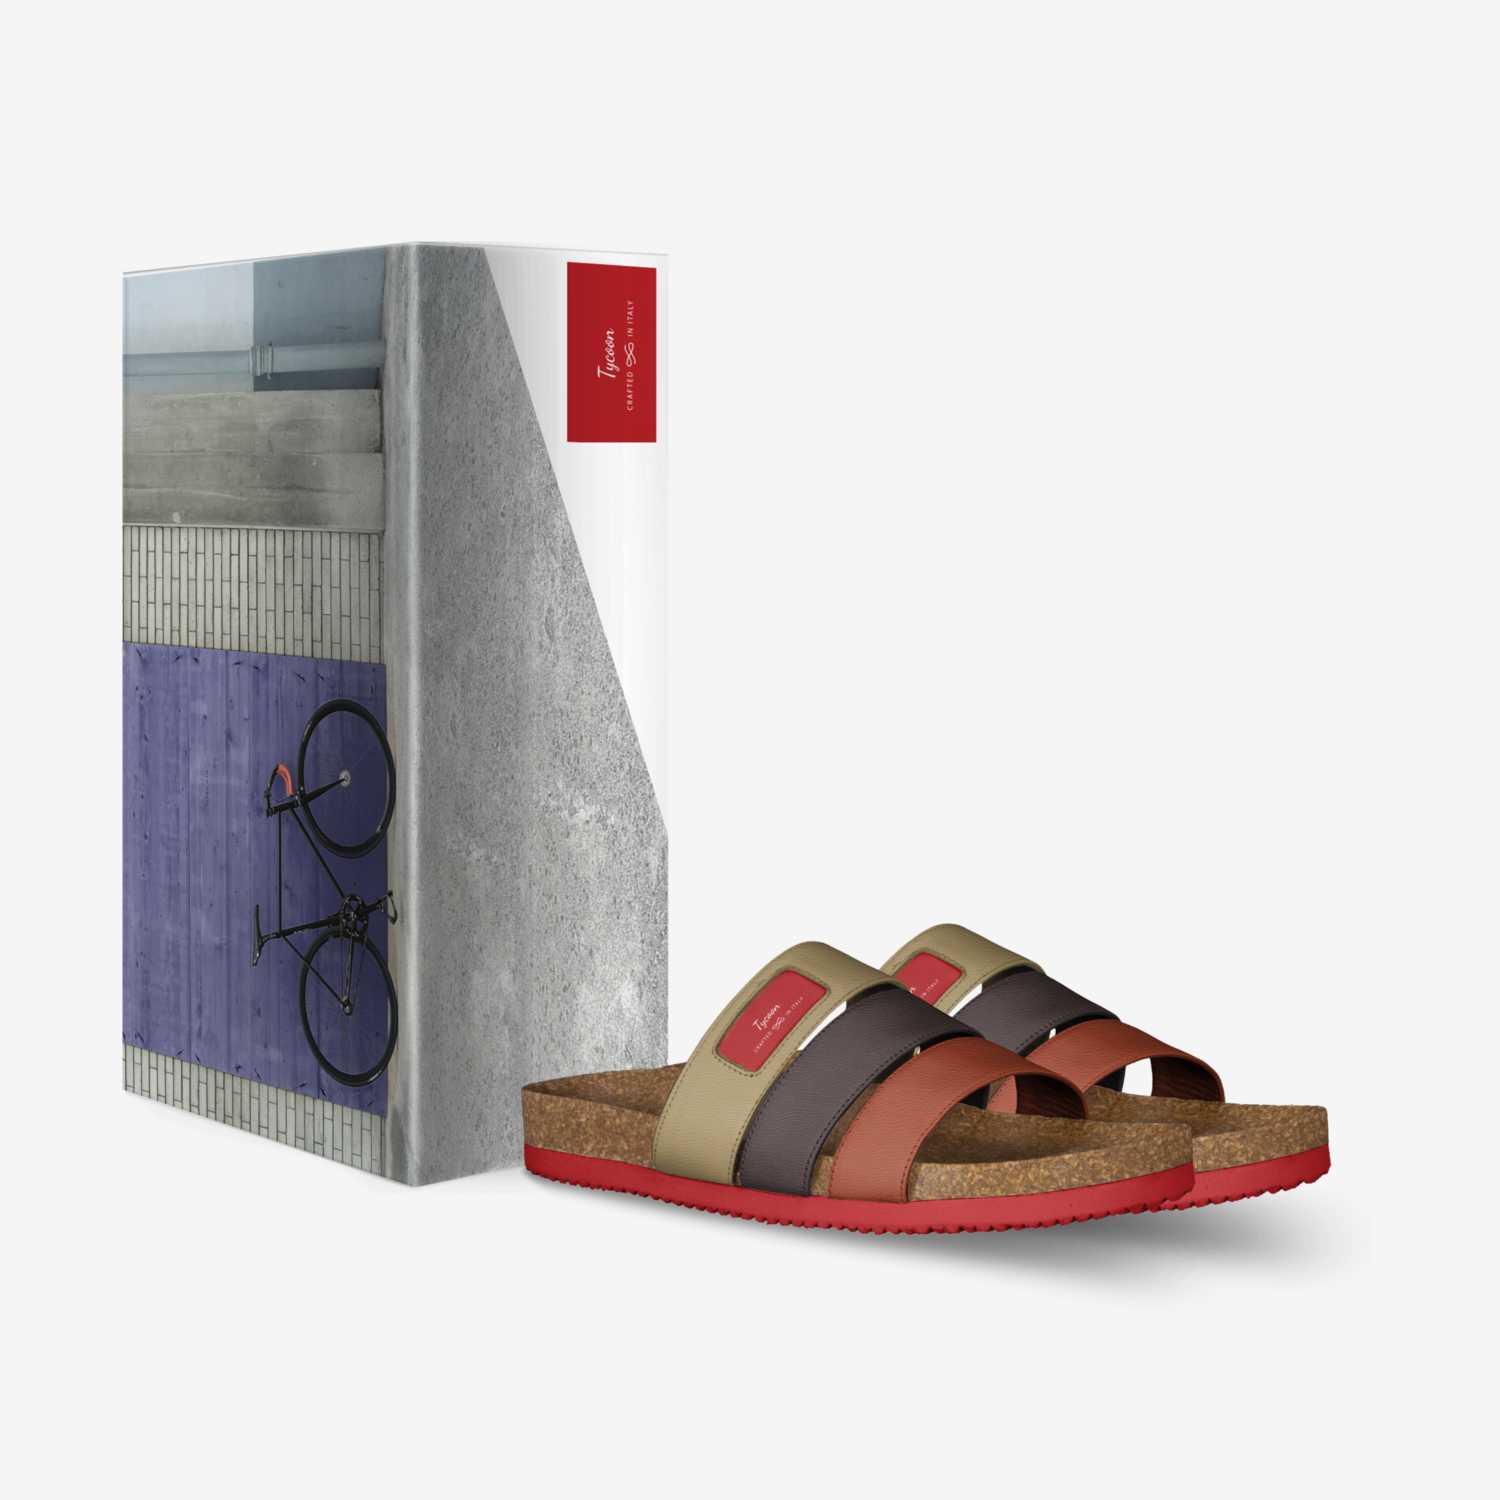 LynnieLok custom made in Italy shoes by Heidi Lynn Rolle | Box view